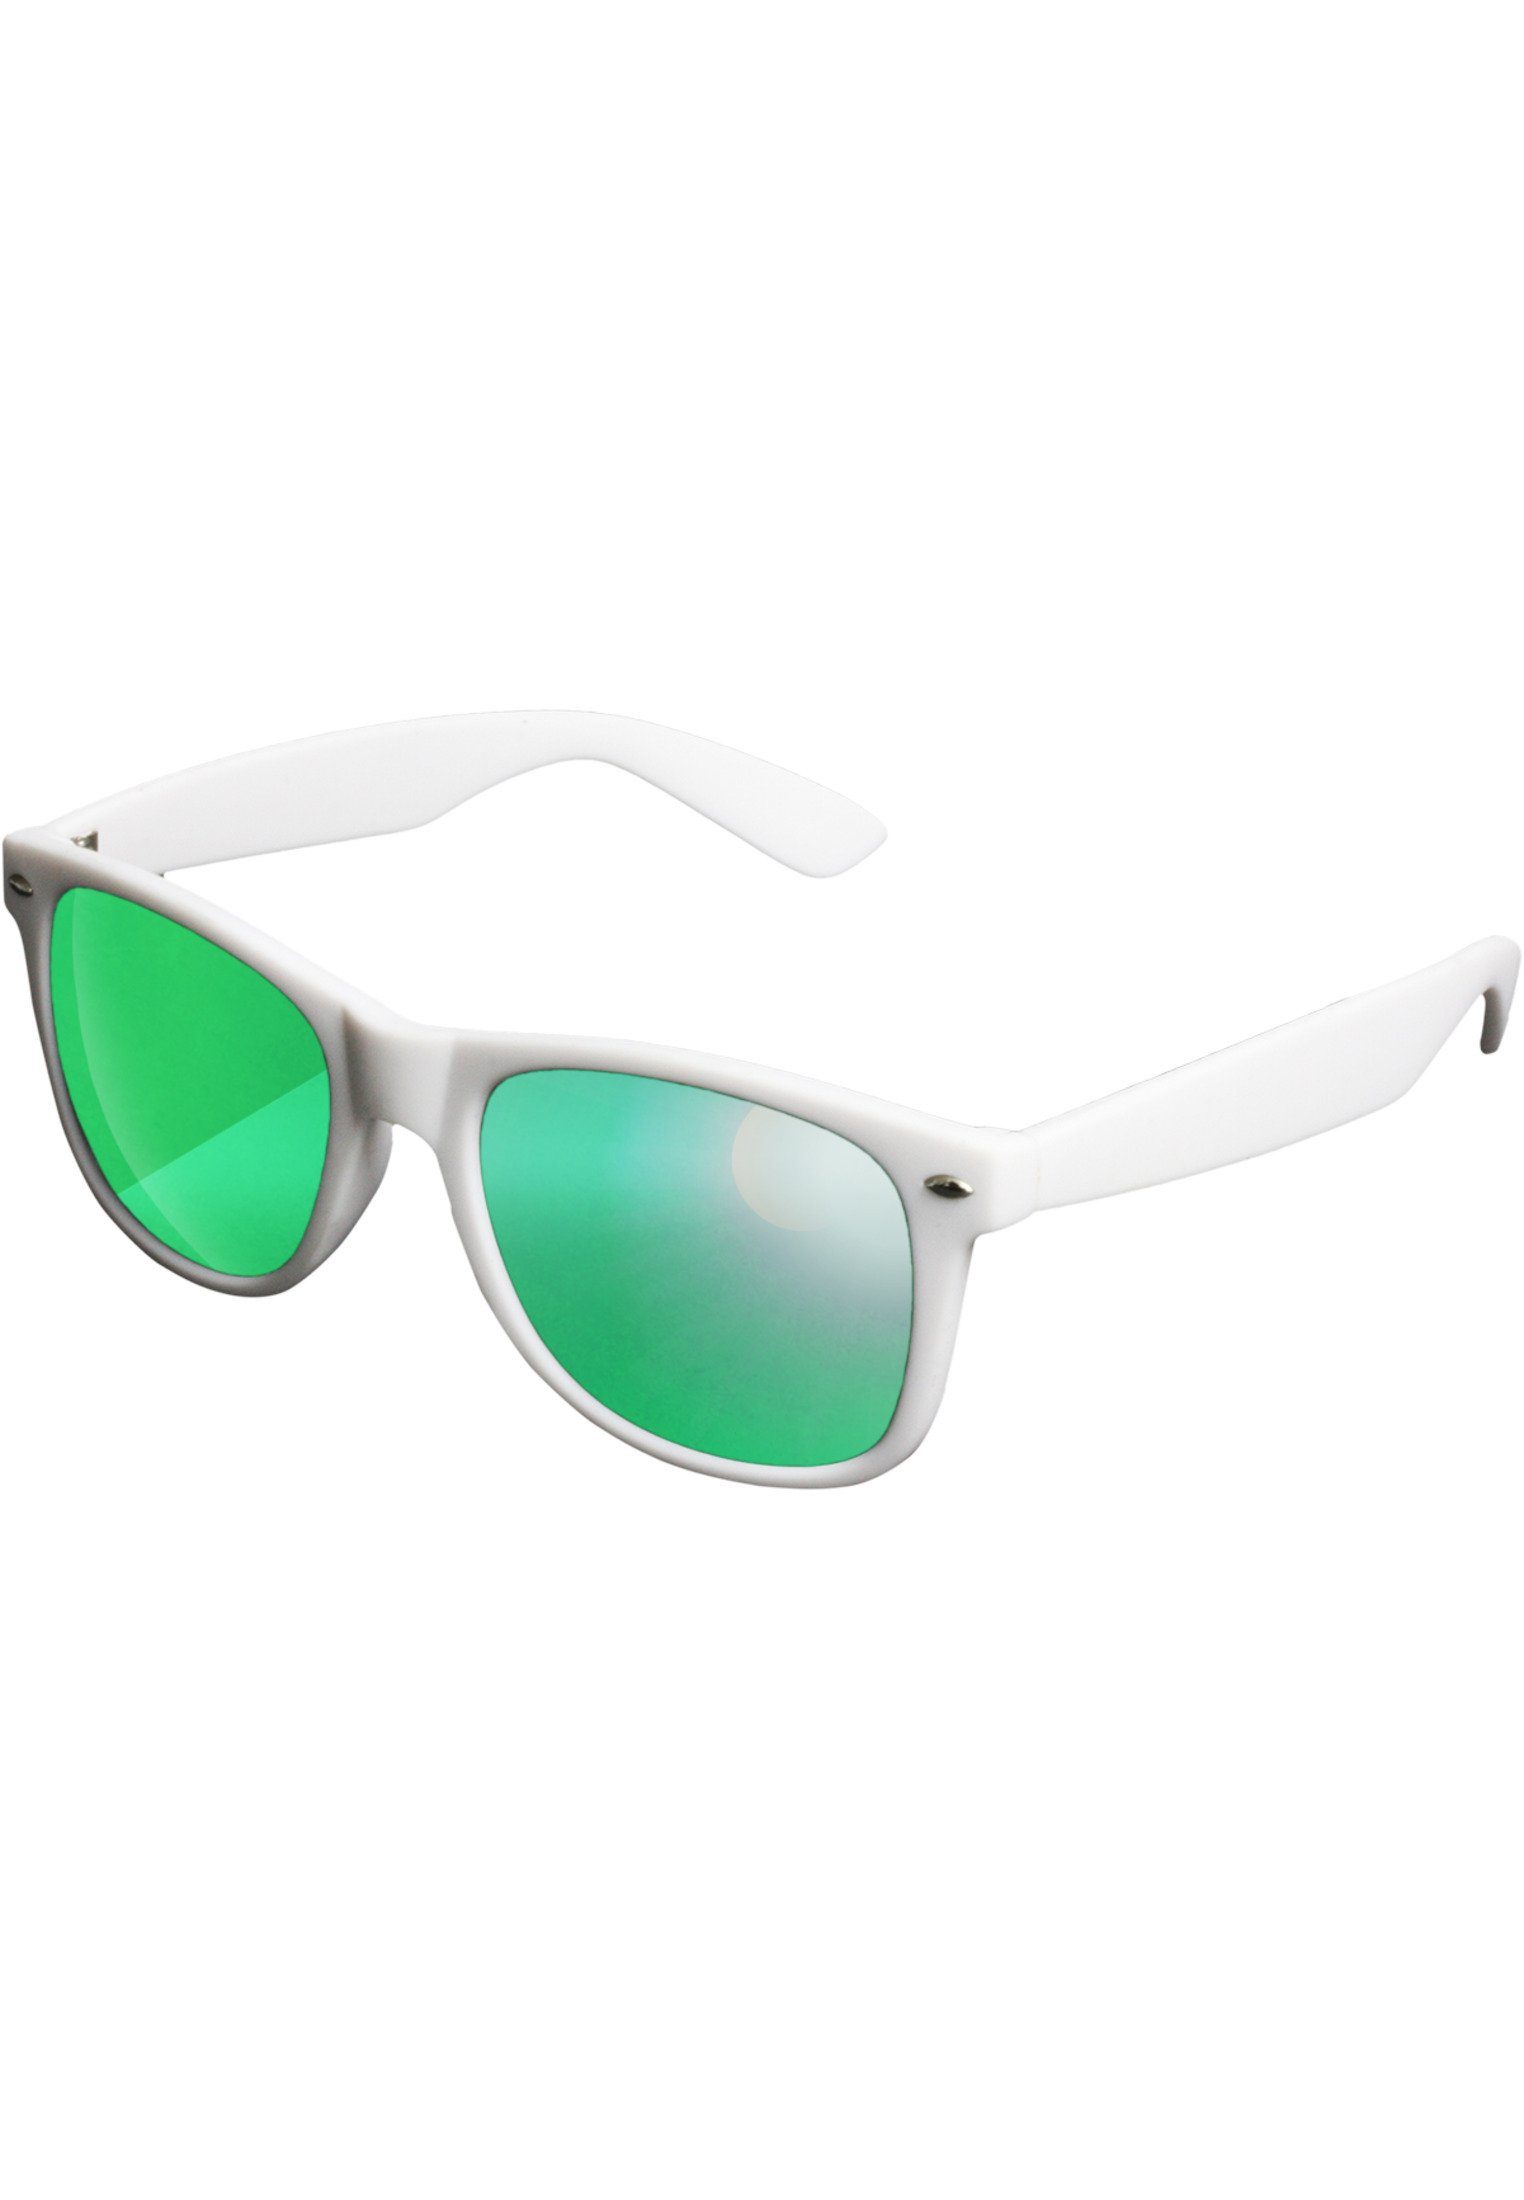 Sunglasses Likoma Accessoires Mirror wht/grn Sonnenbrille MSTRDS